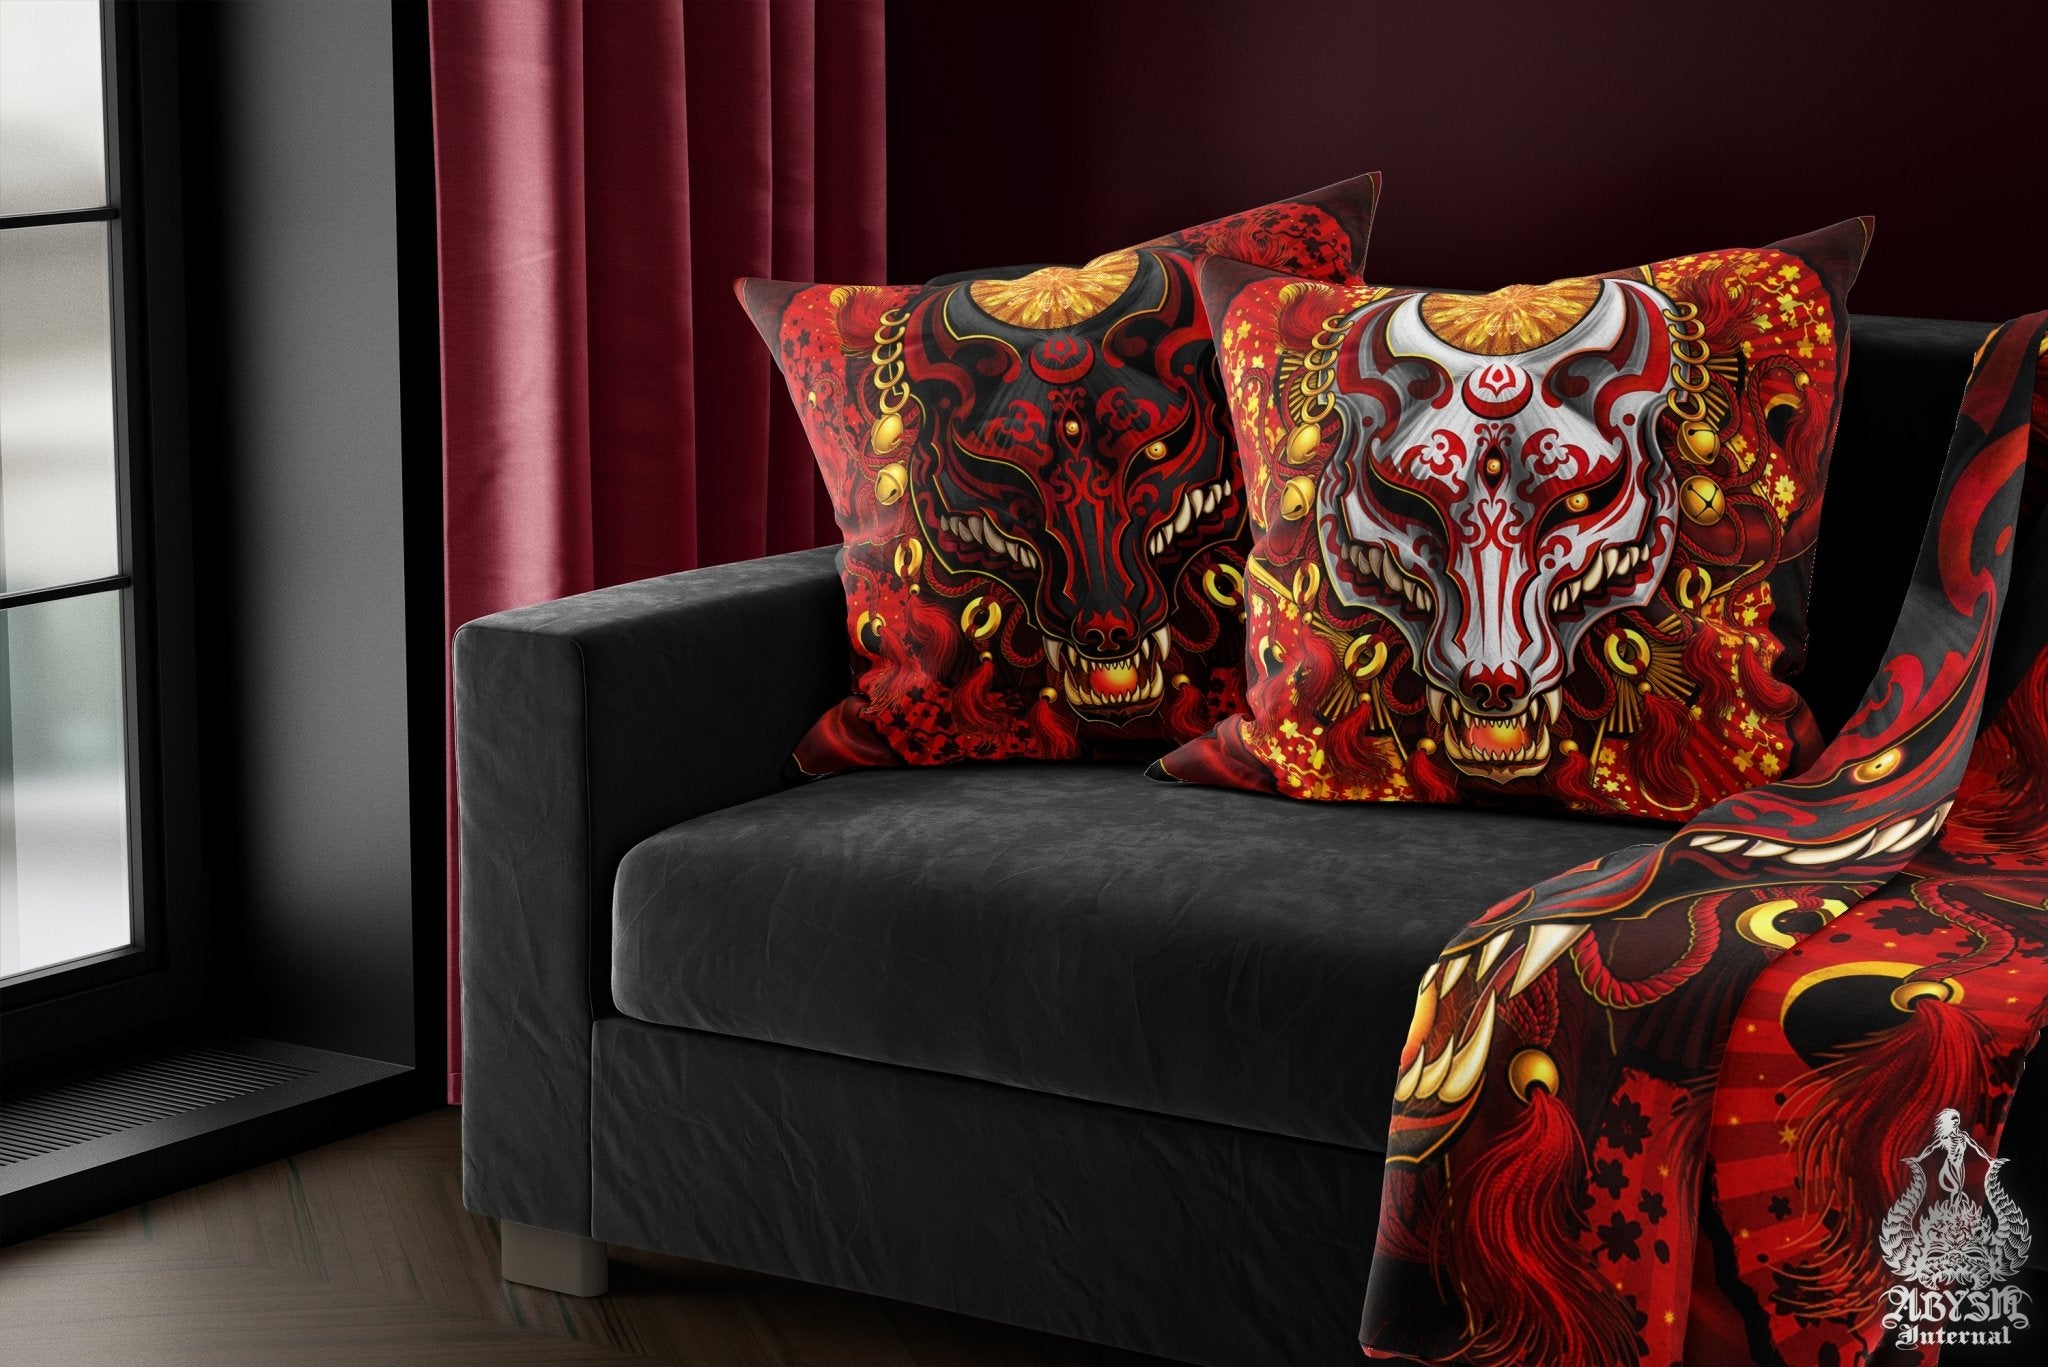 Kitsune Throw Pillow, Decorative Accent Cushion, Japanese Fox Mask, Okami, Anime and Gamer Room Decor, Alternative Home - Red & Black - Abysm Internal